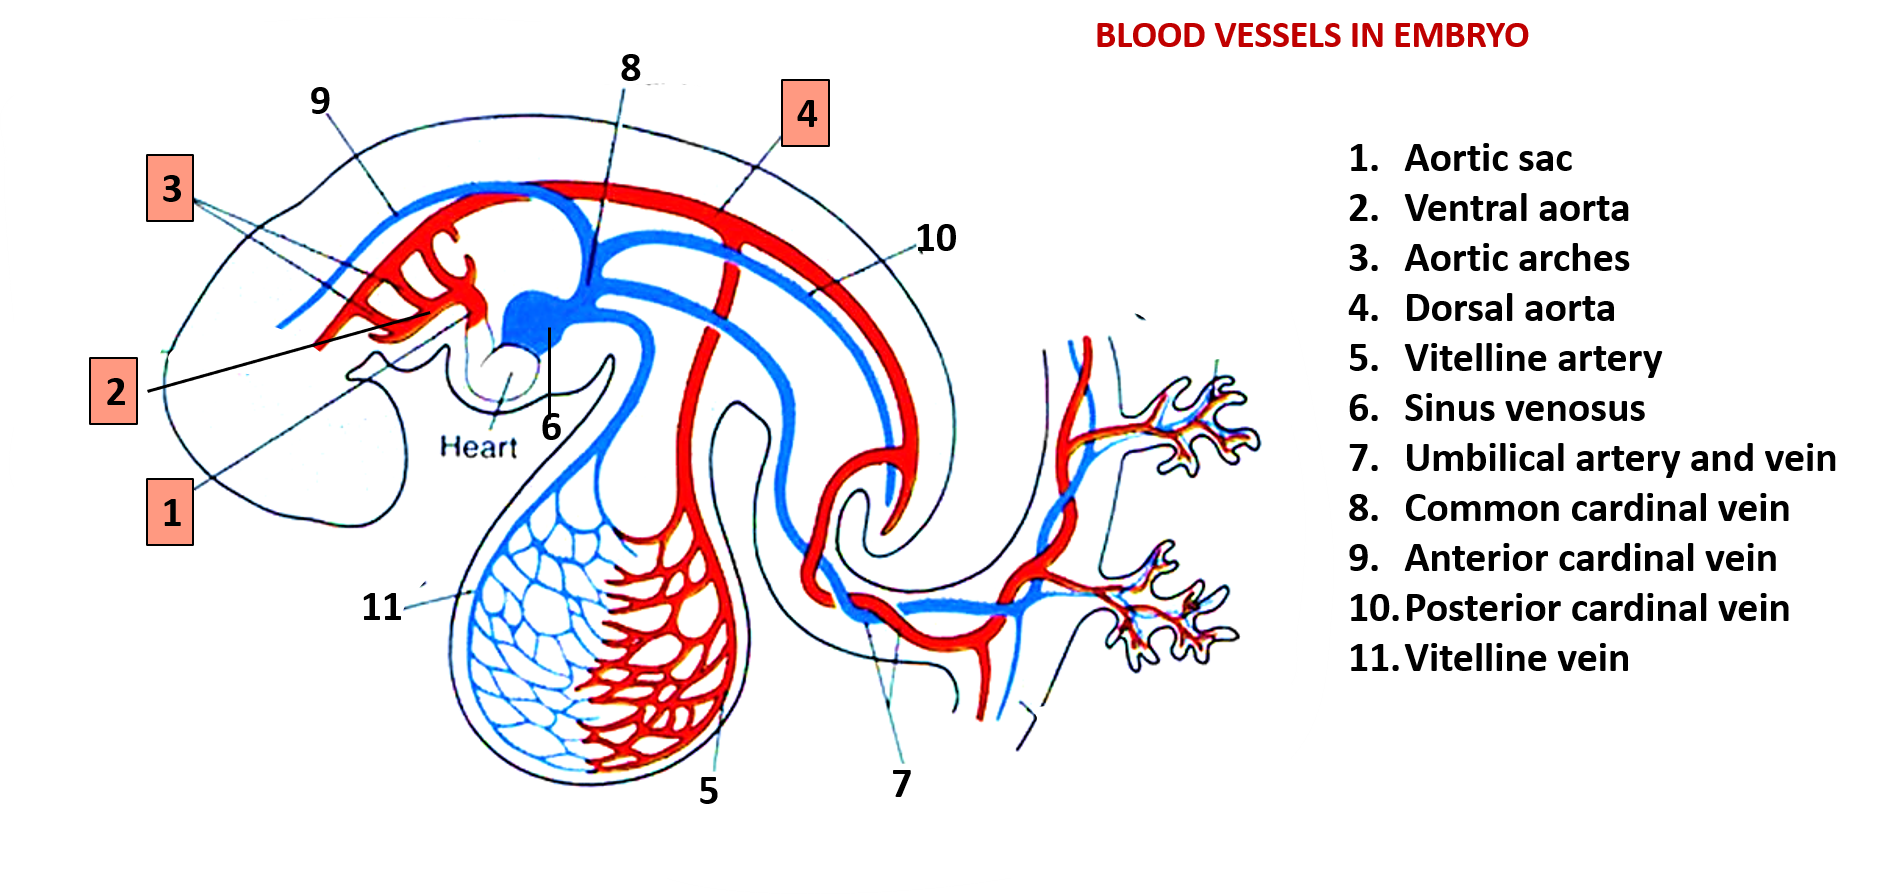 Blood vessels of fetus